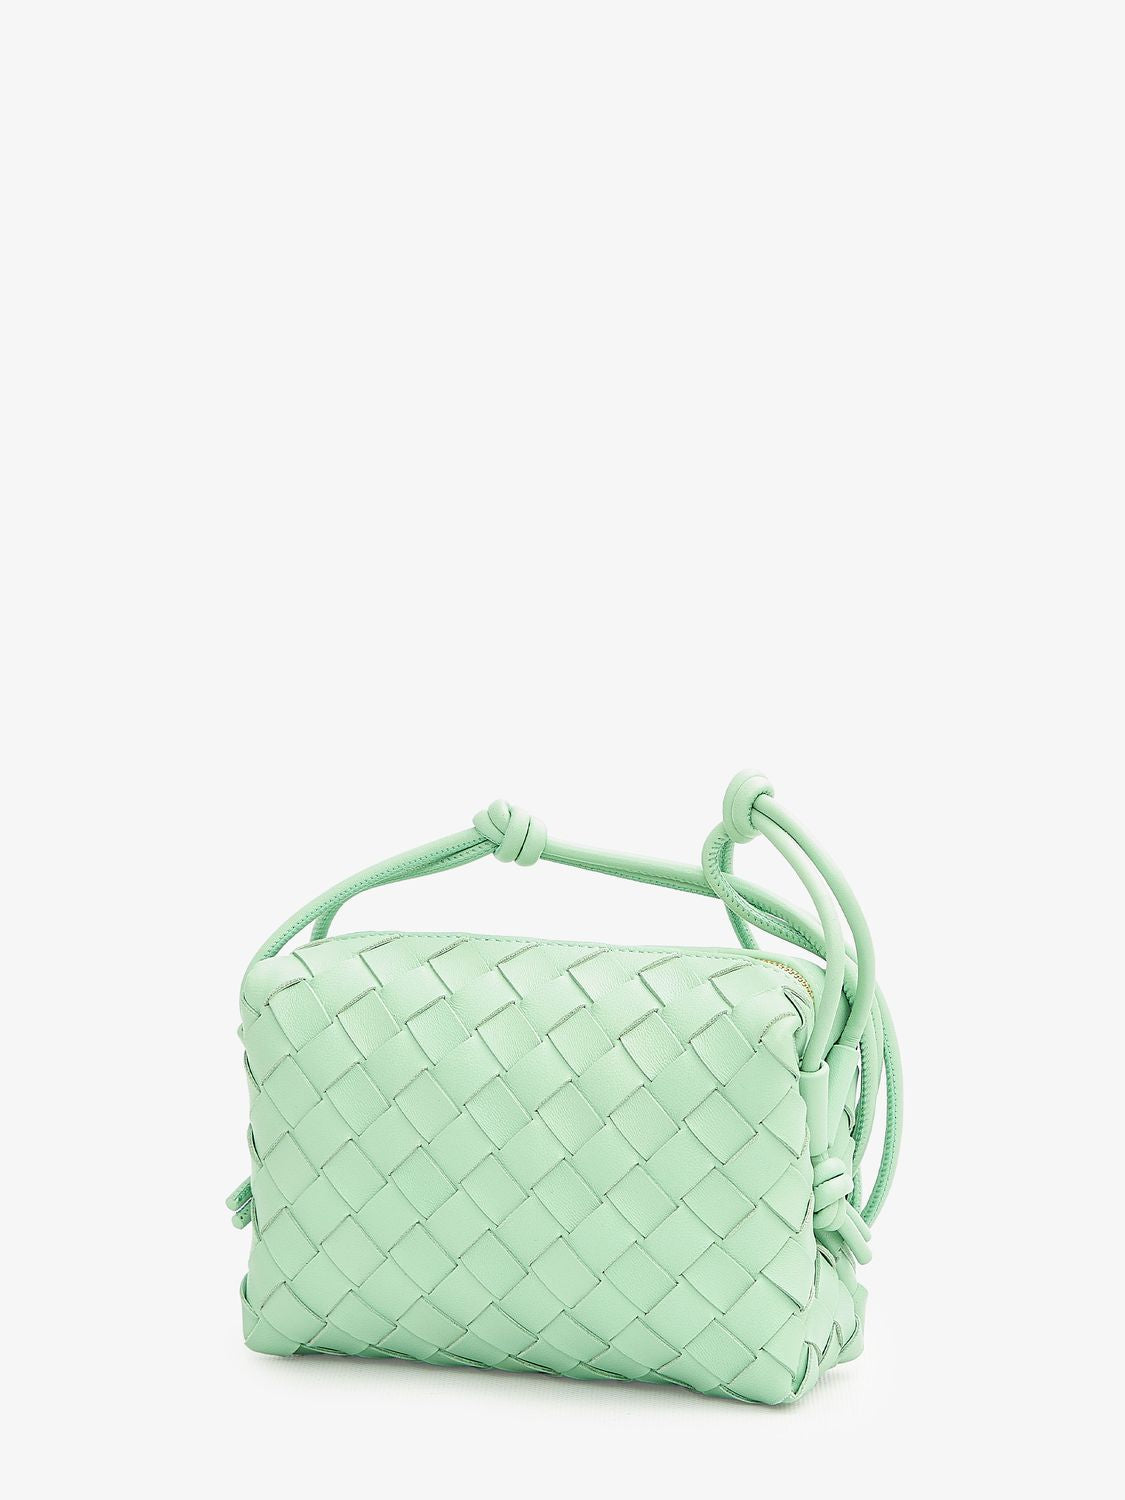 Green Leather Mini Camera Bag with Decorative Knots Strap